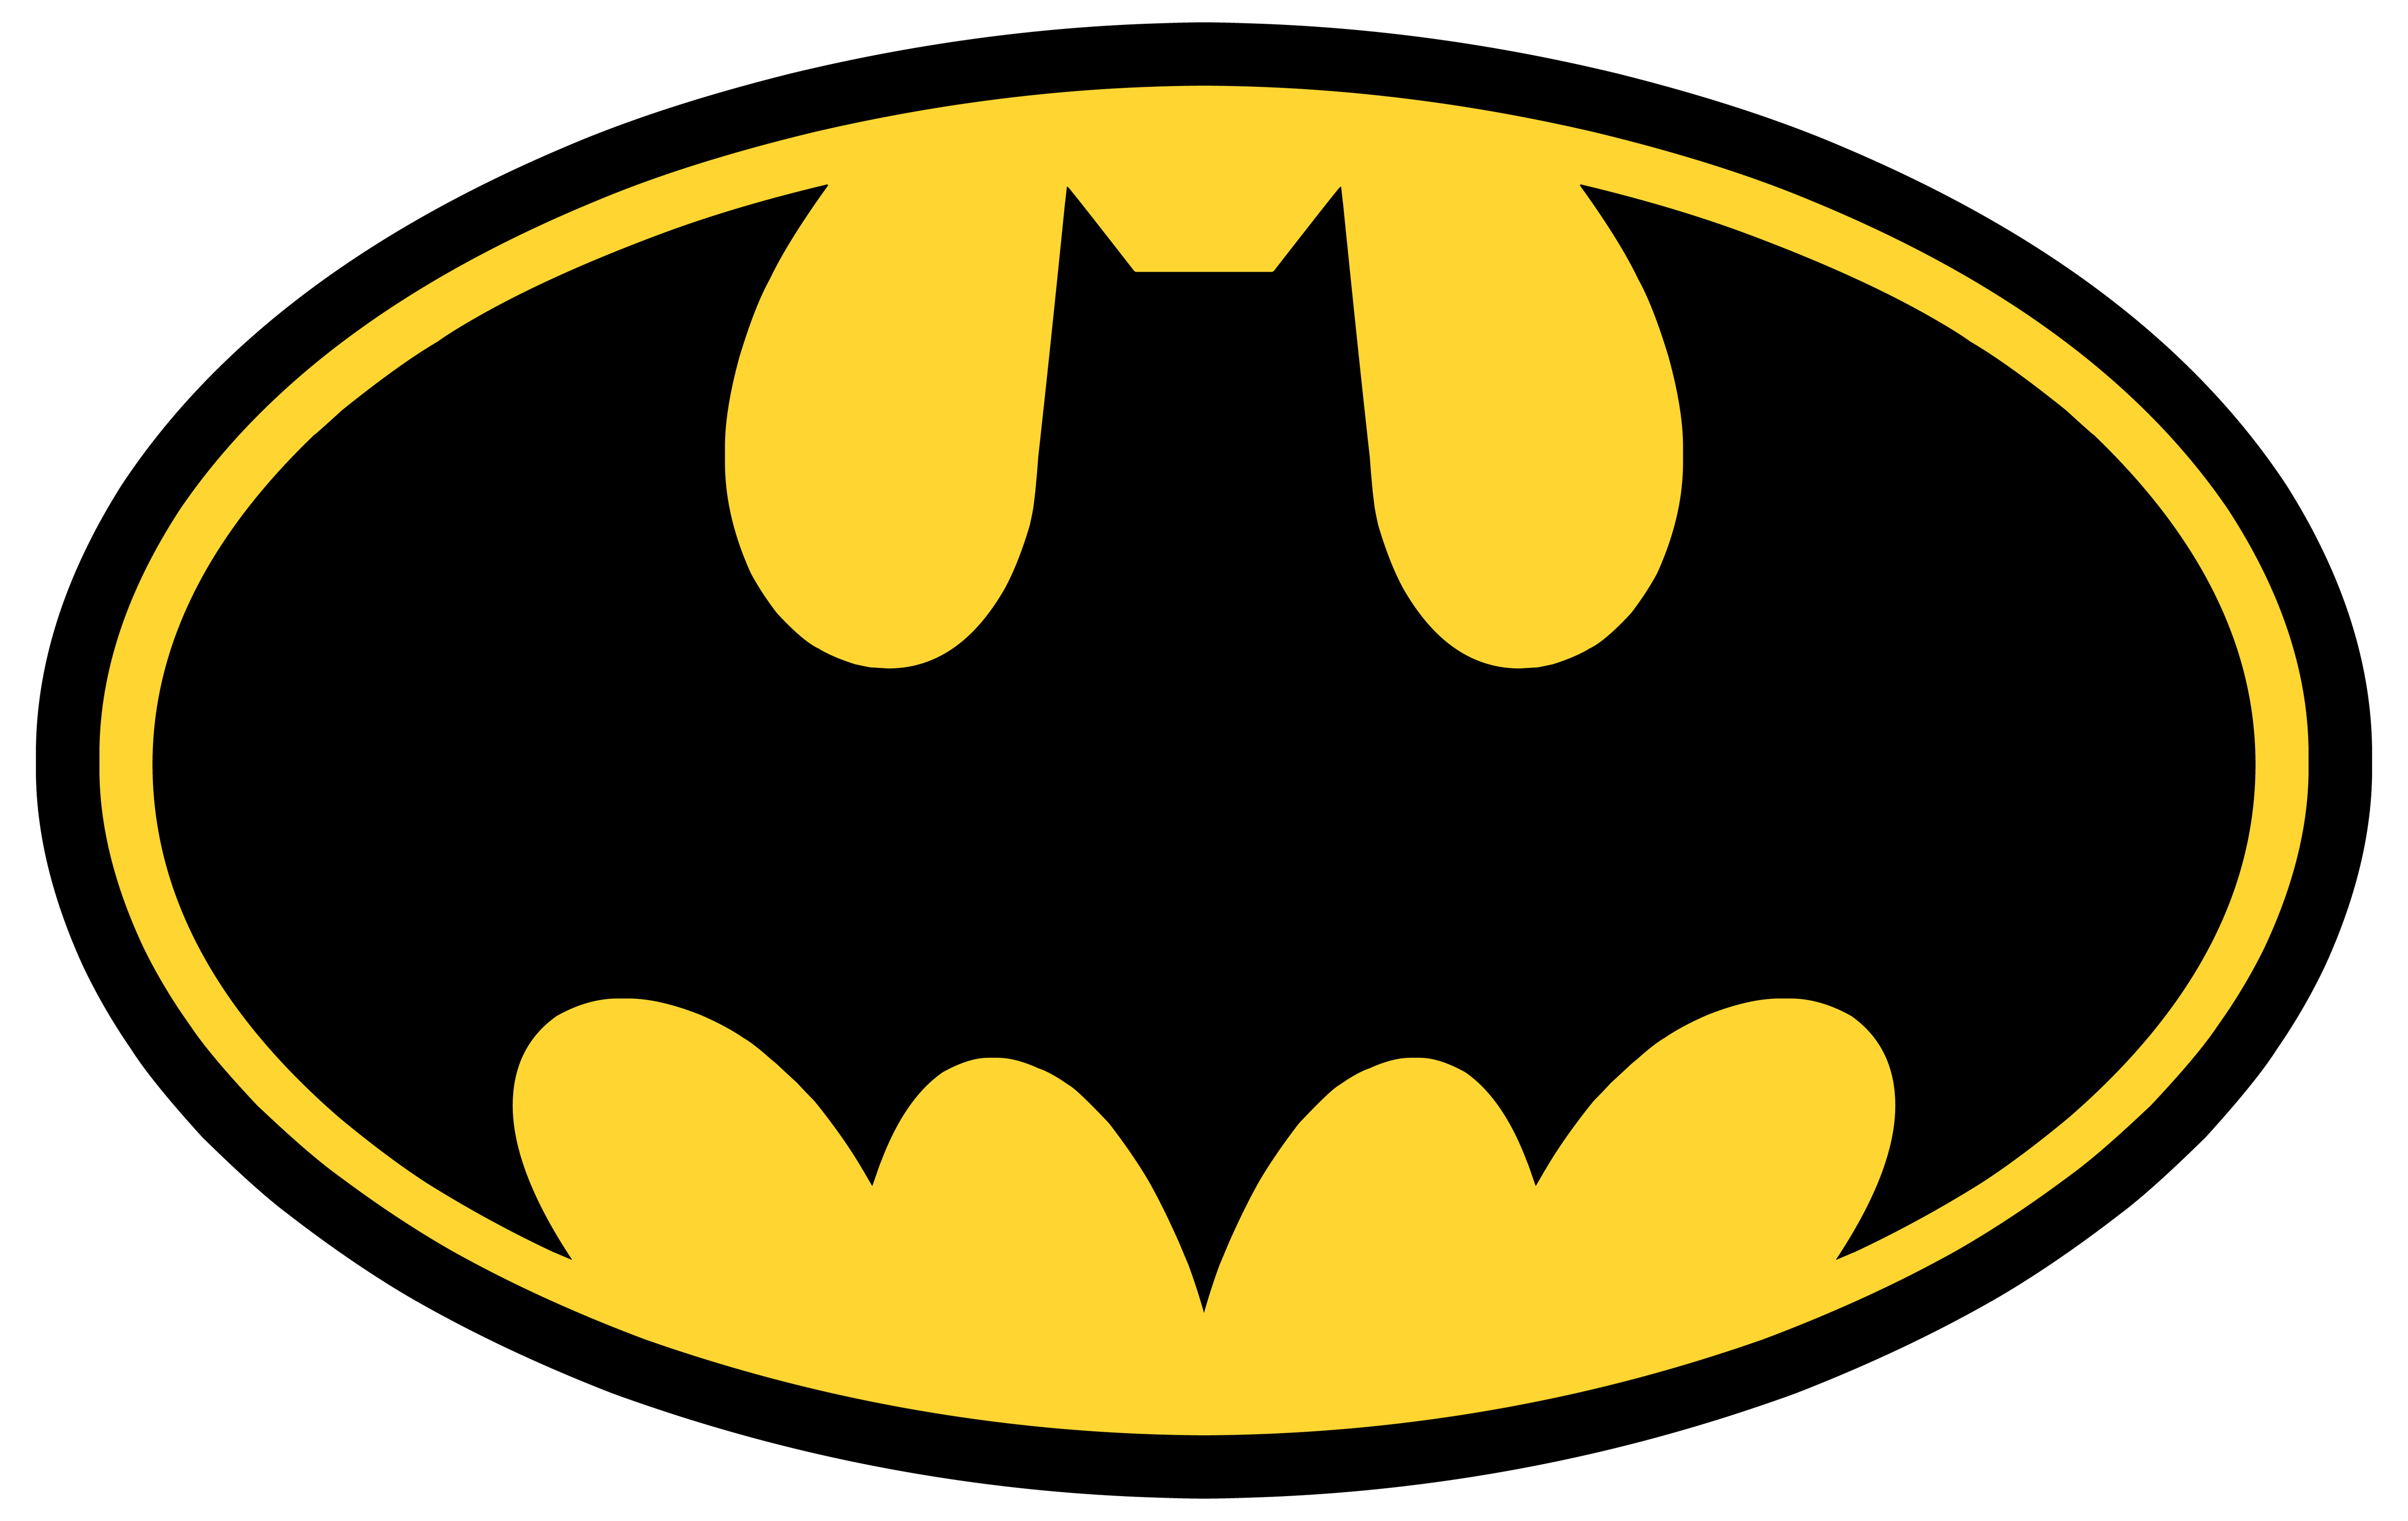 The Batman Logo PNG Image